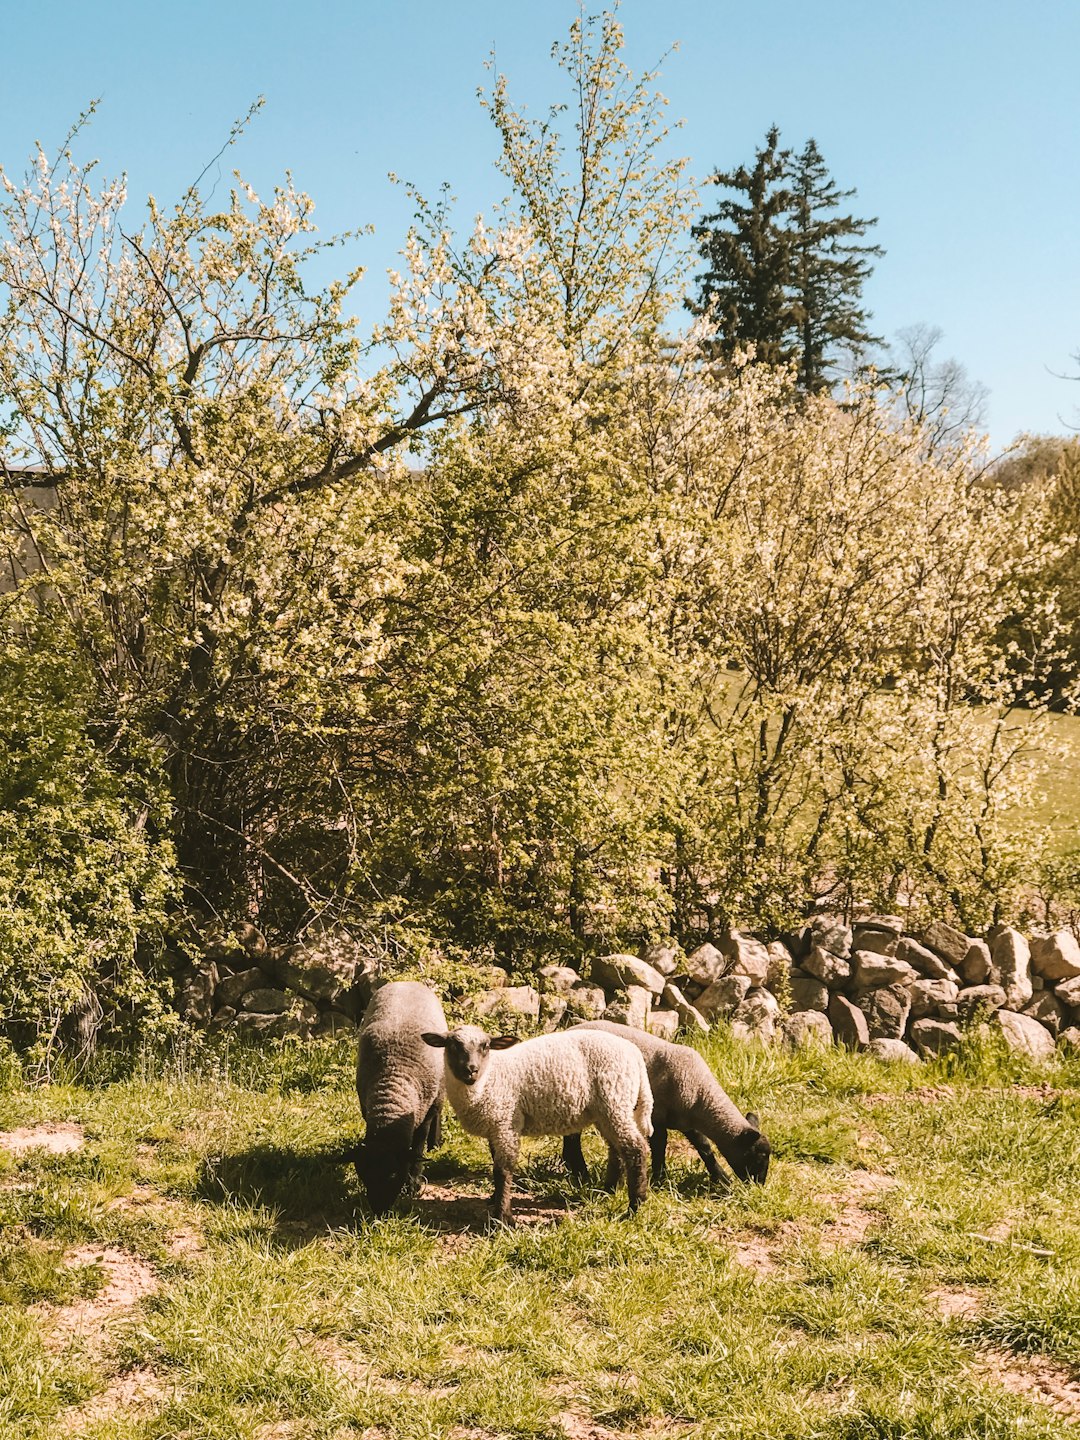 herd of sheep standing near trees